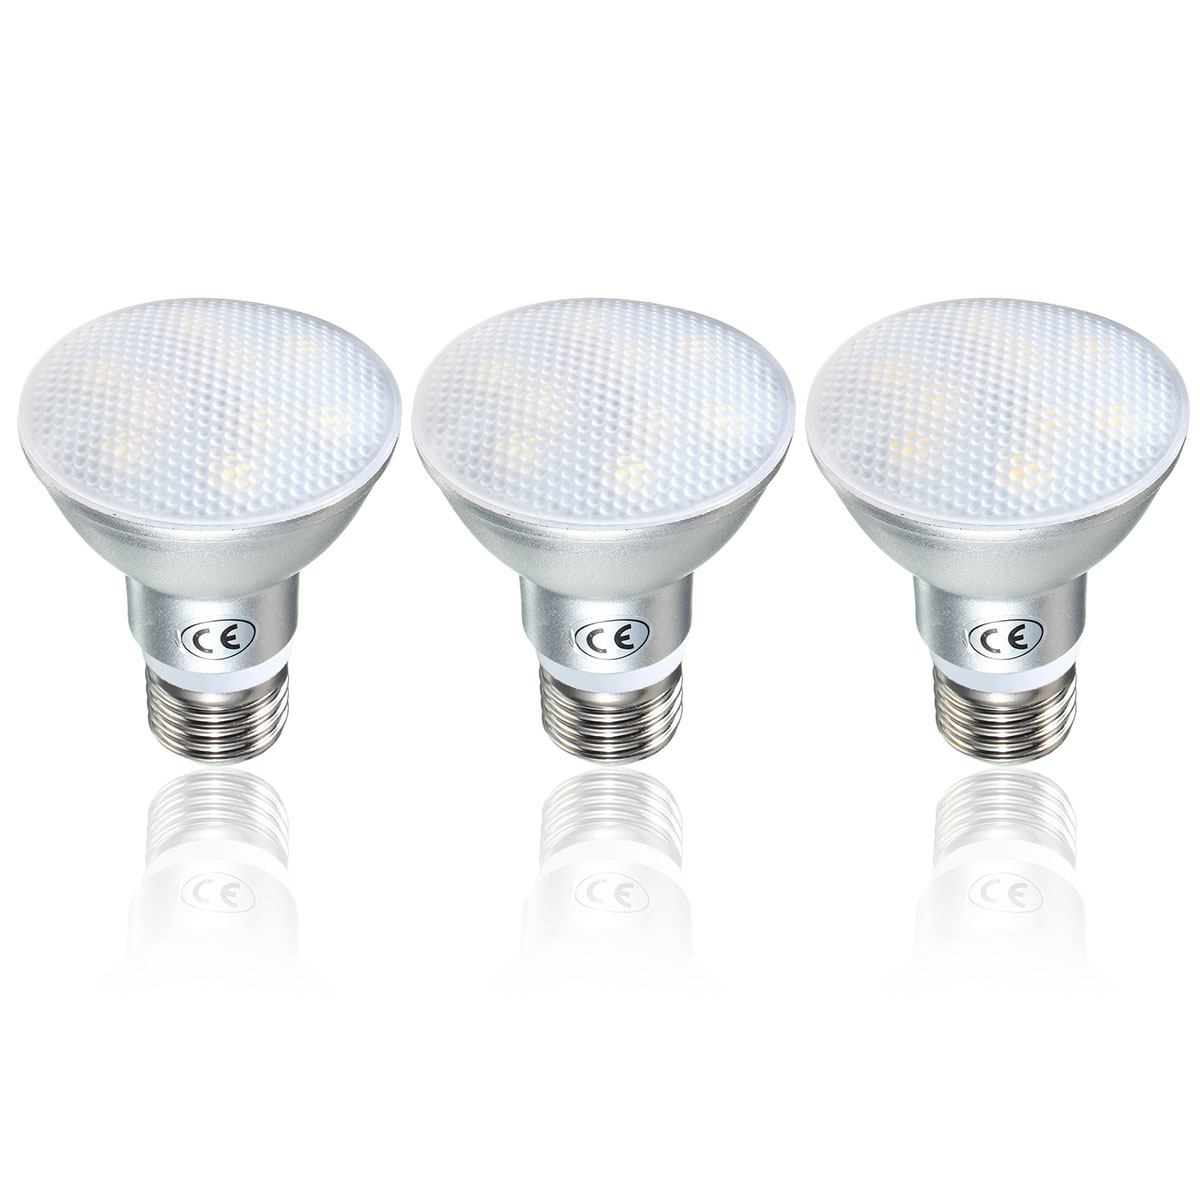 Dimmable-E27-PAR20-9W-LED-PlasticampALuminum-525Lm-IP65-Globe-Light-Lamp-Bulb-AC110V-1073157